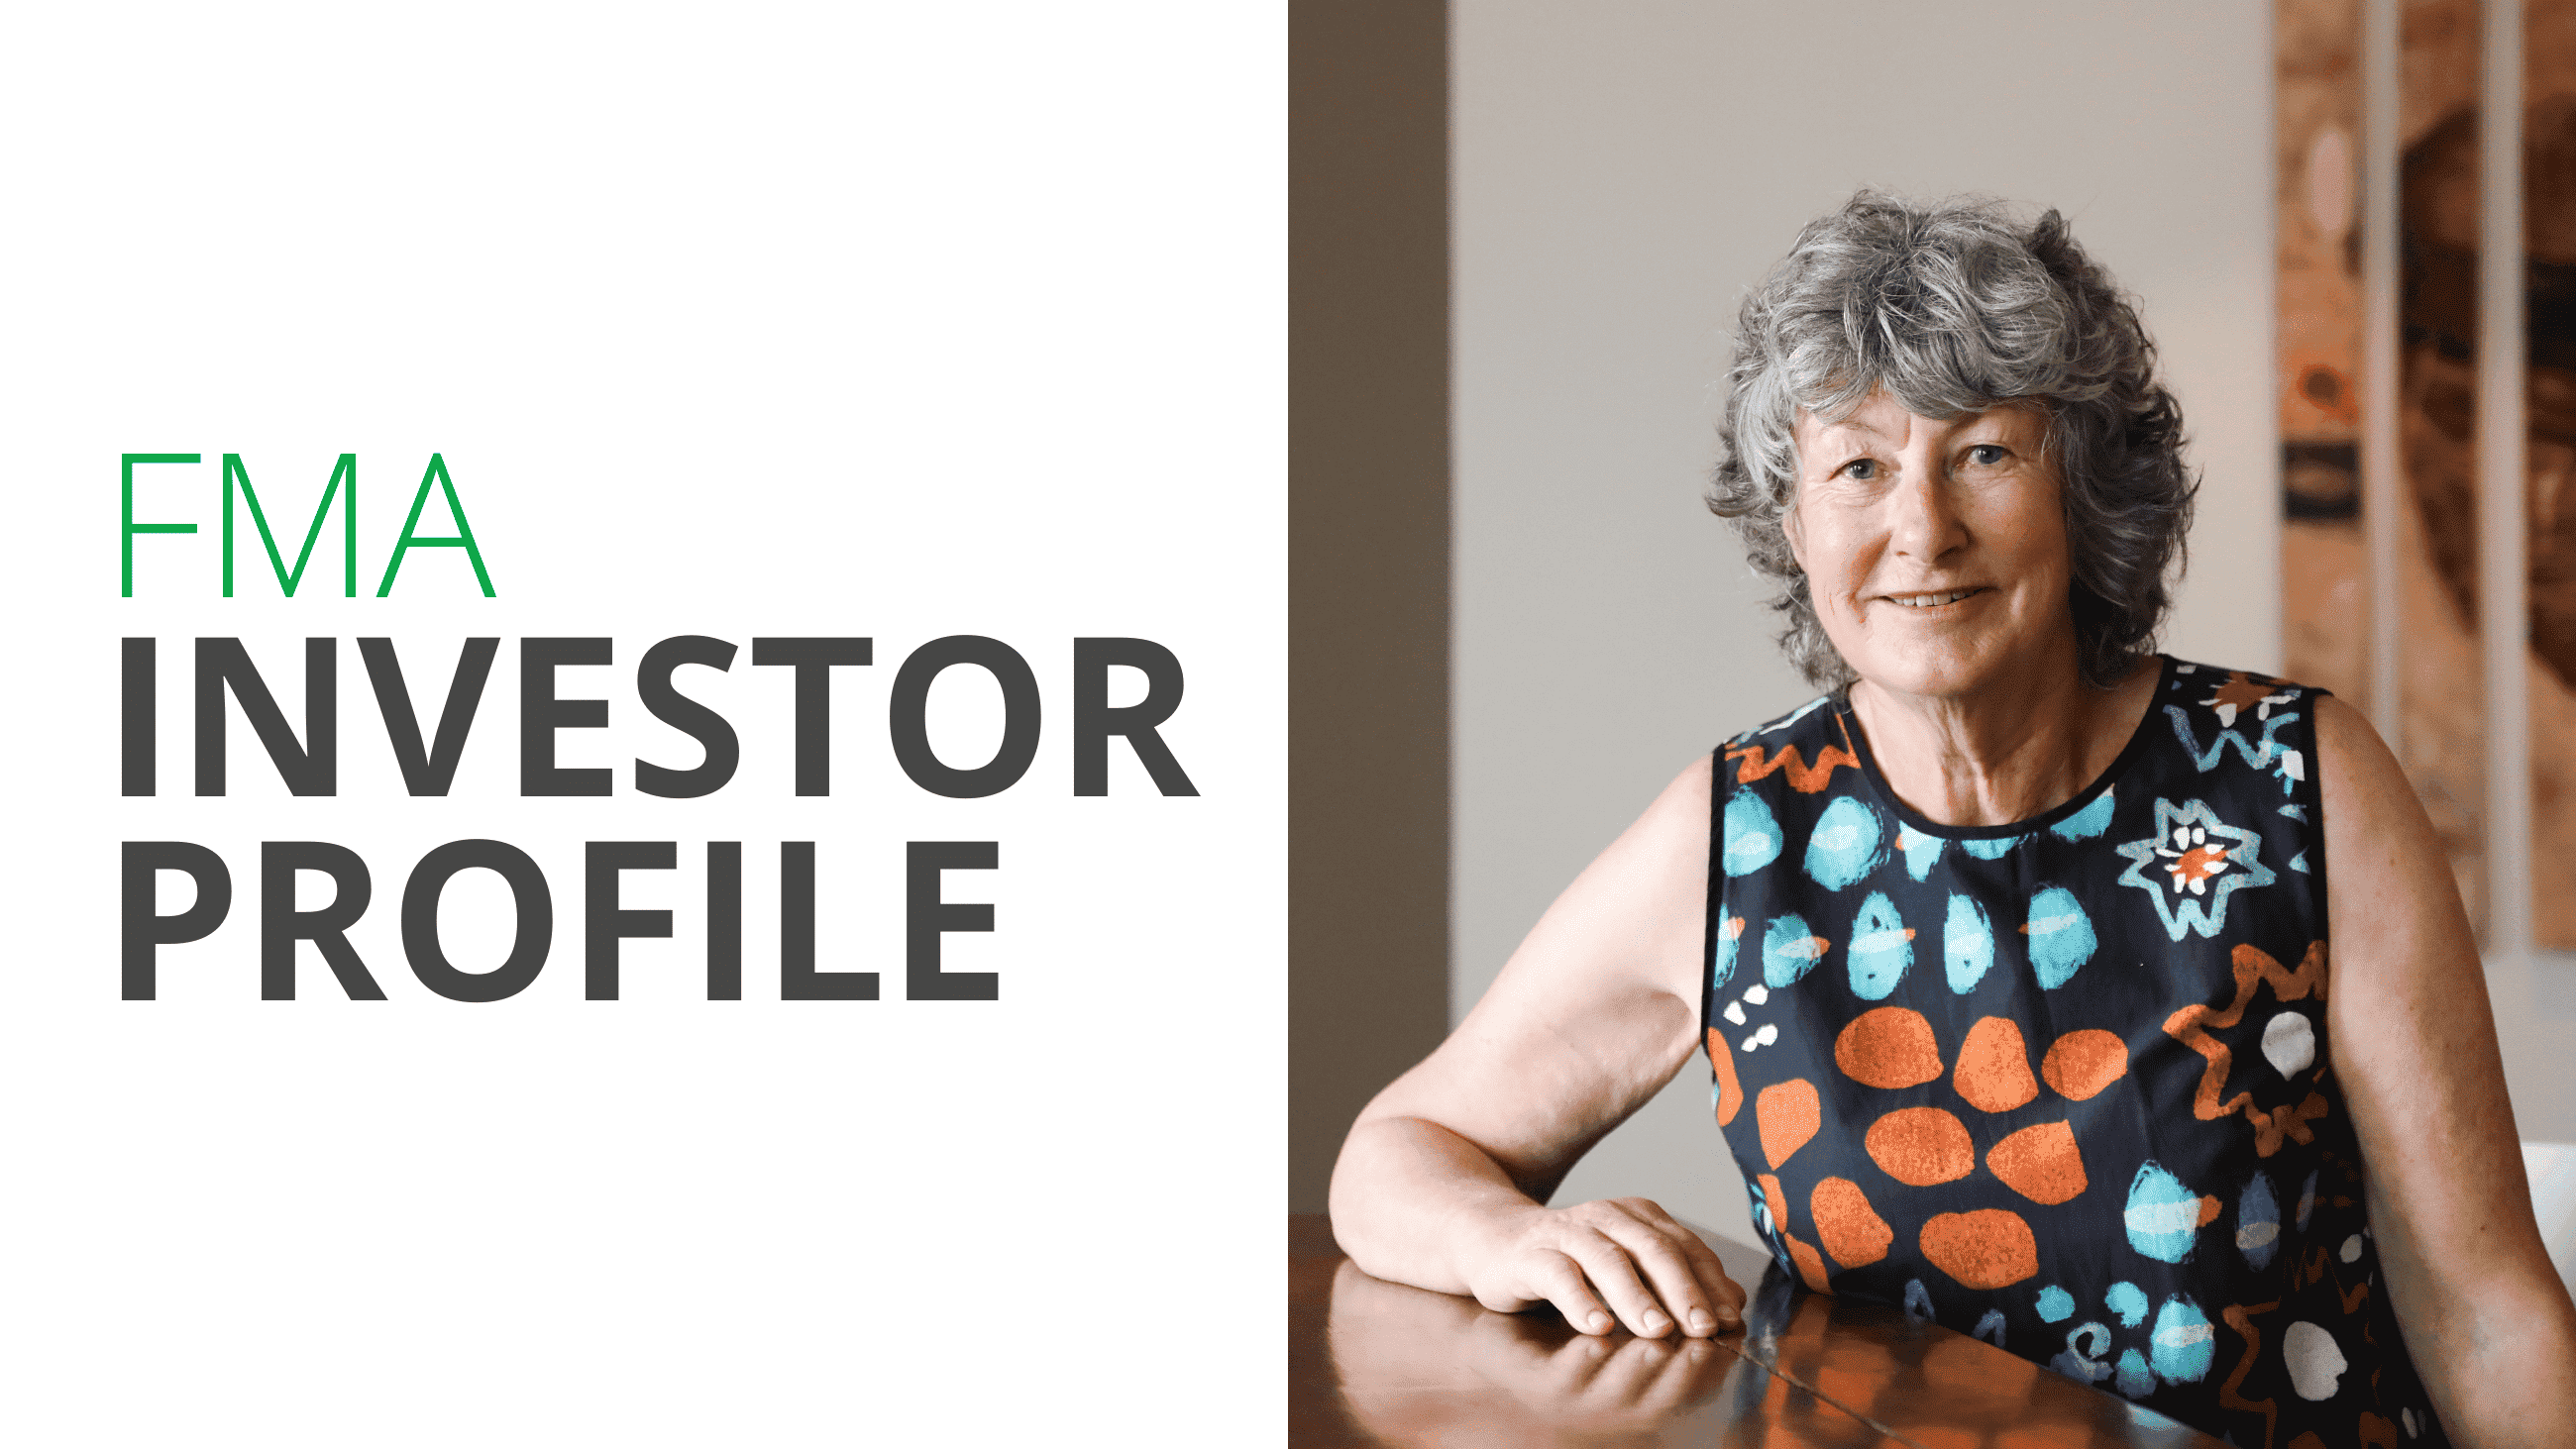 FMA investor profile: Liz Greive